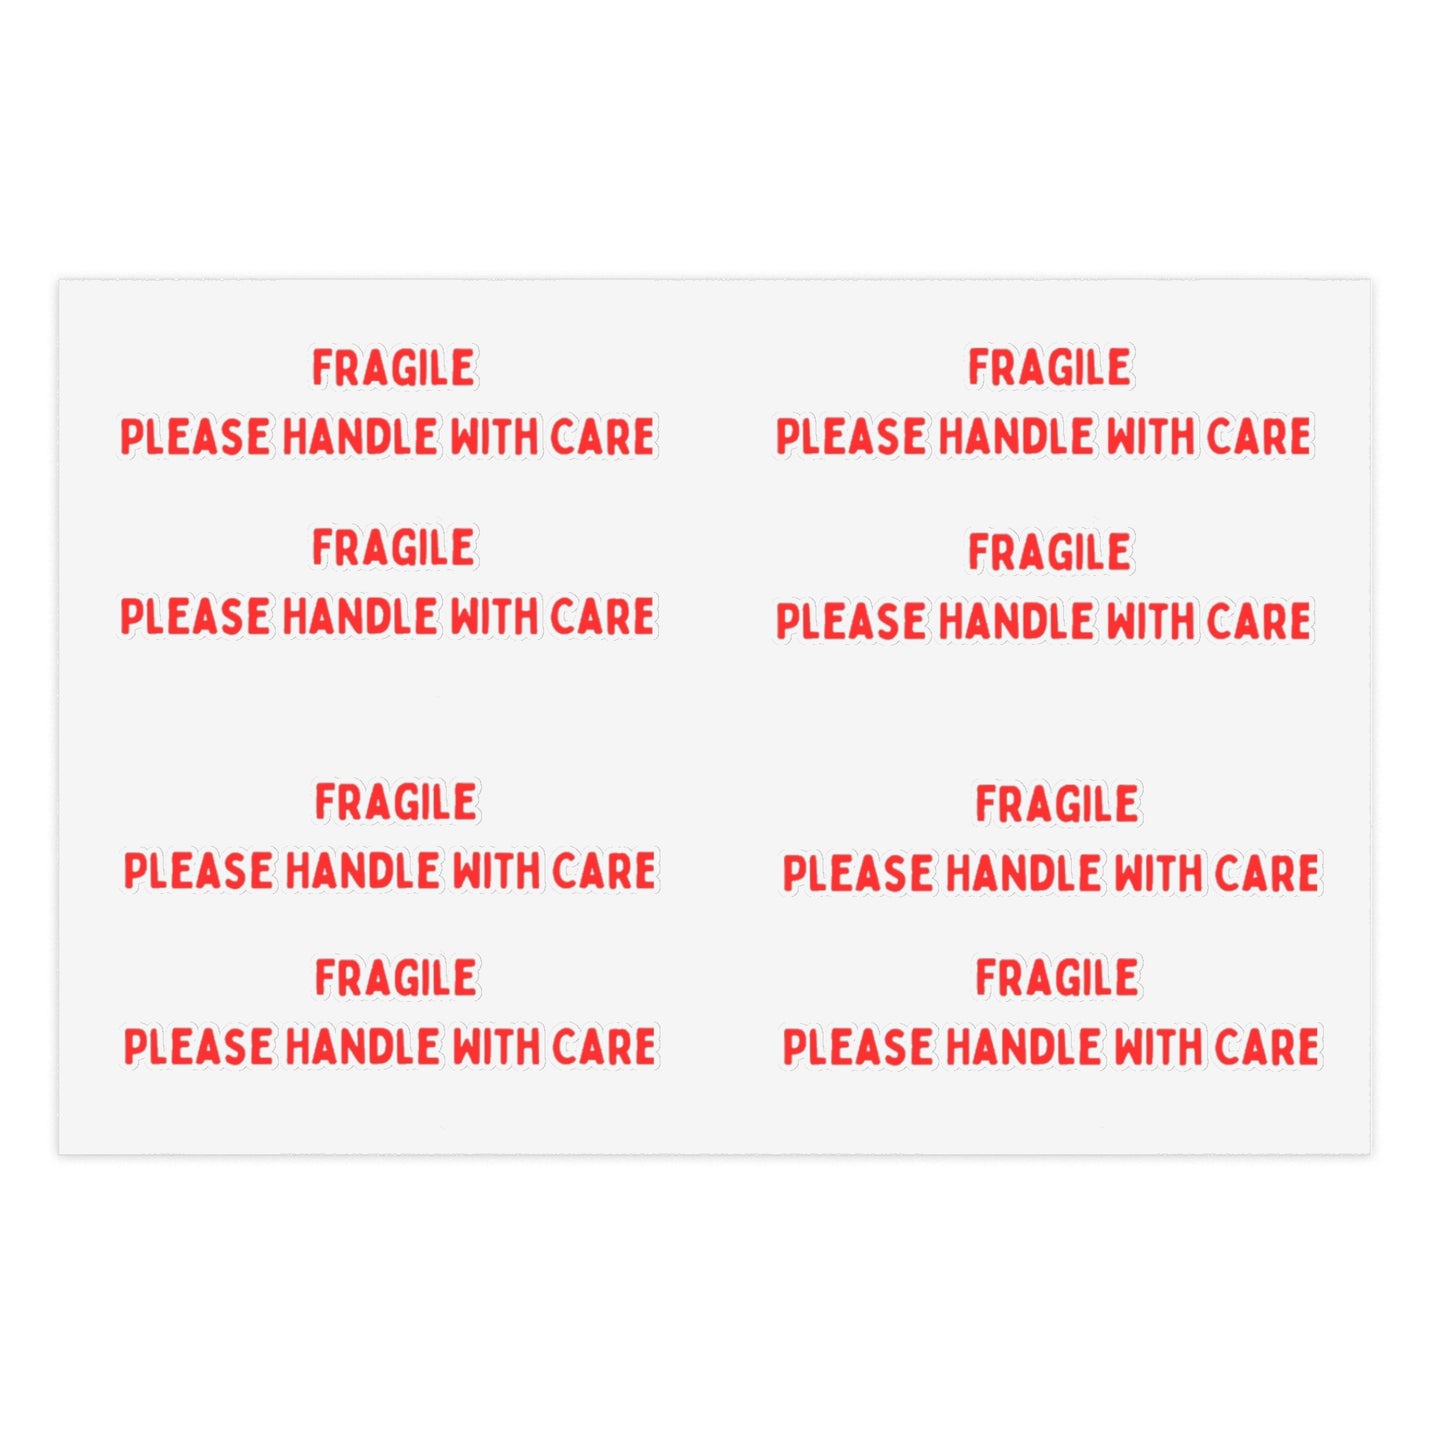 Fragile Sticker Sheets (8 stickers per 11x8.5 sheet)